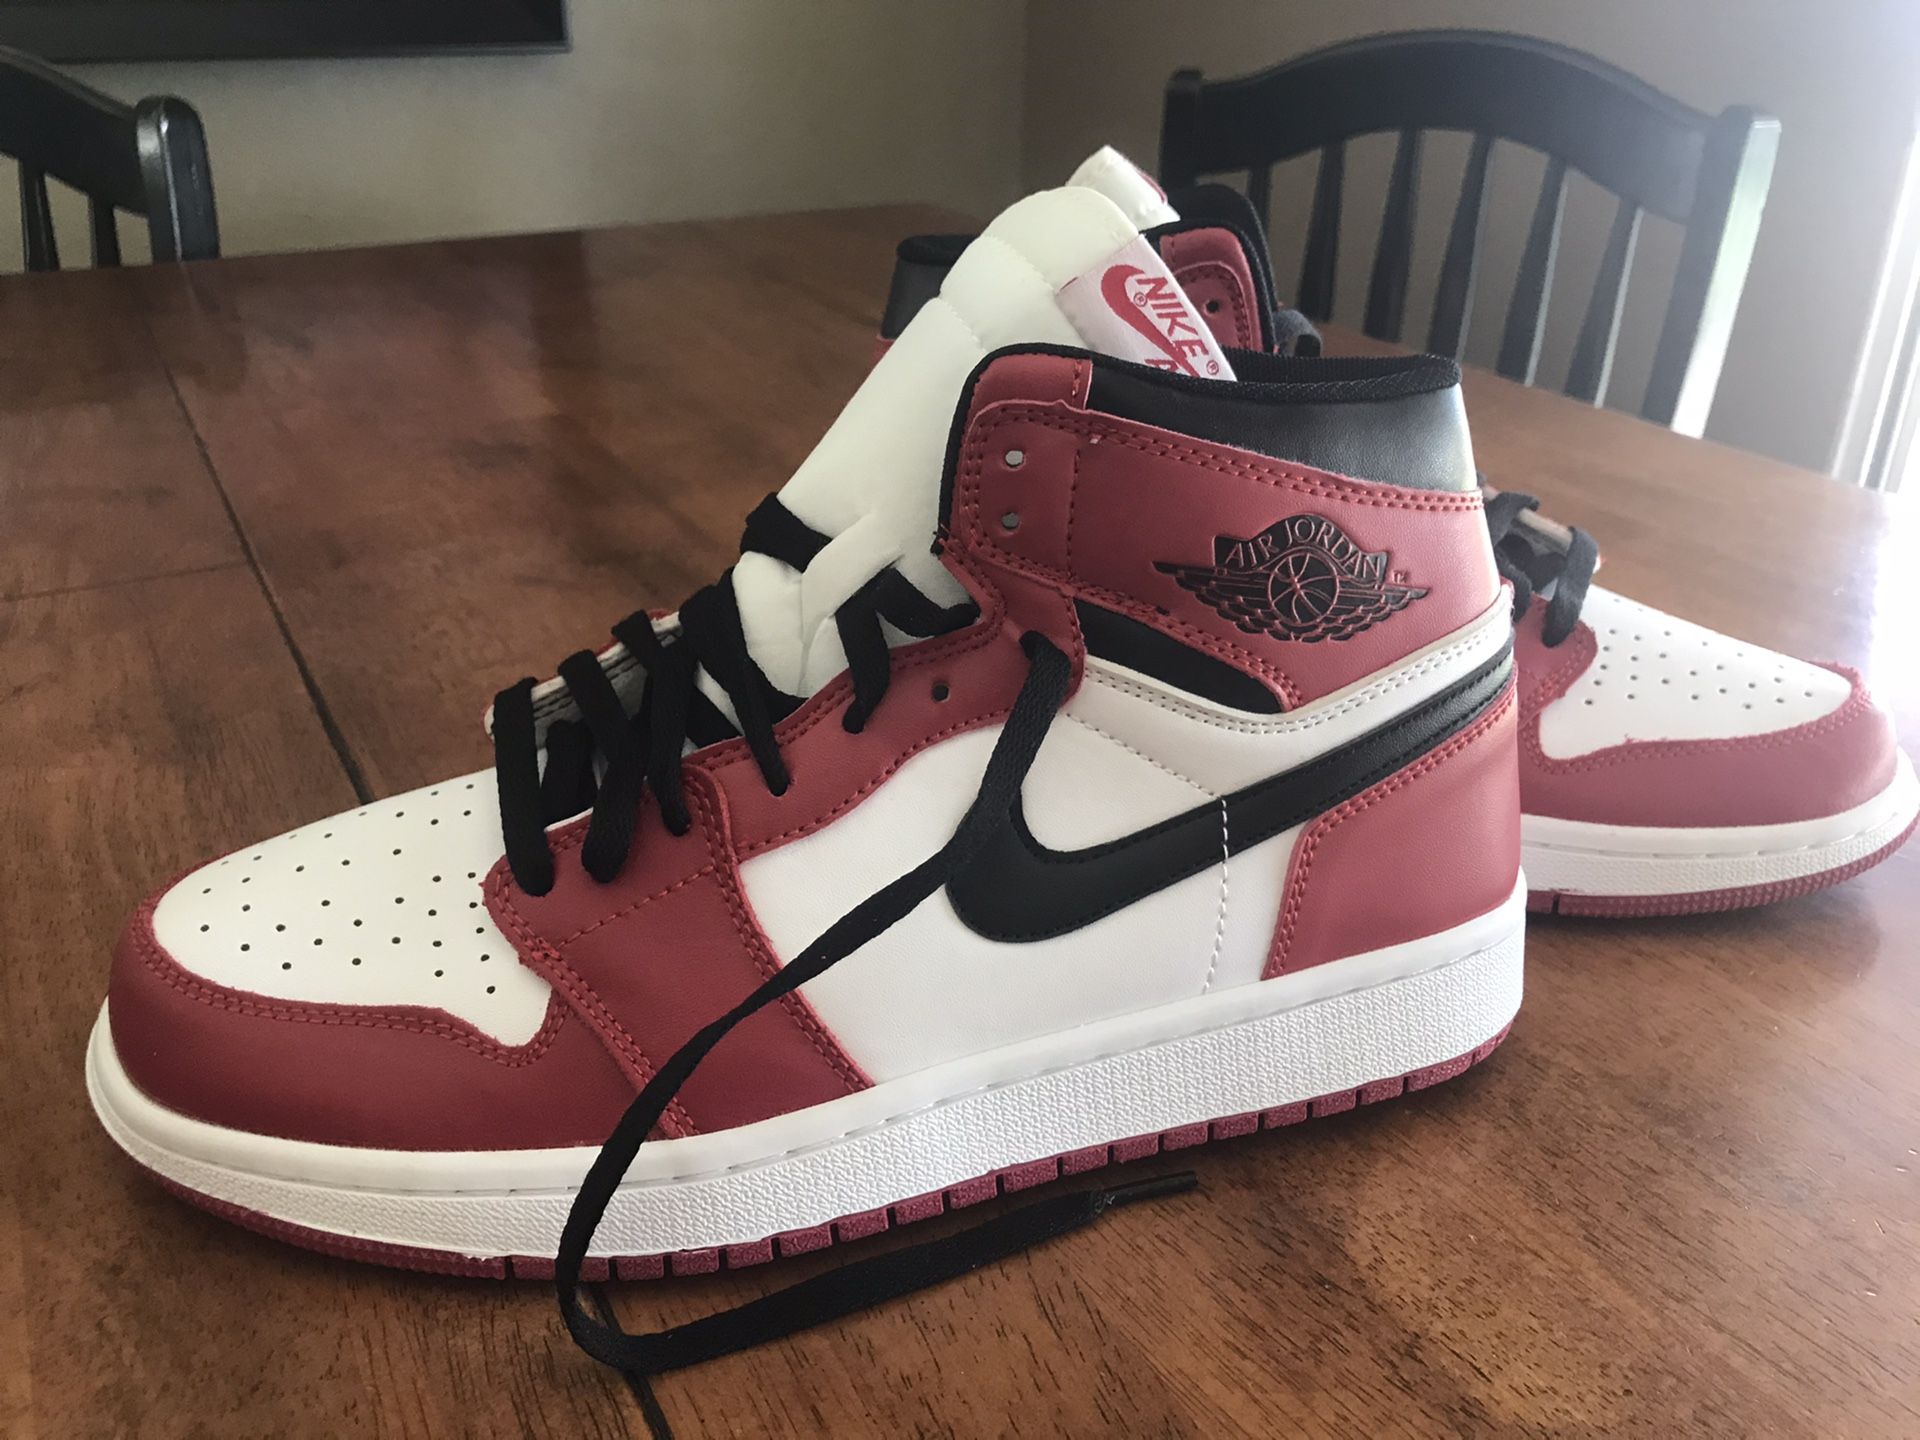 Jordan Ones “Chicago Reds” Very Rare size 9.5